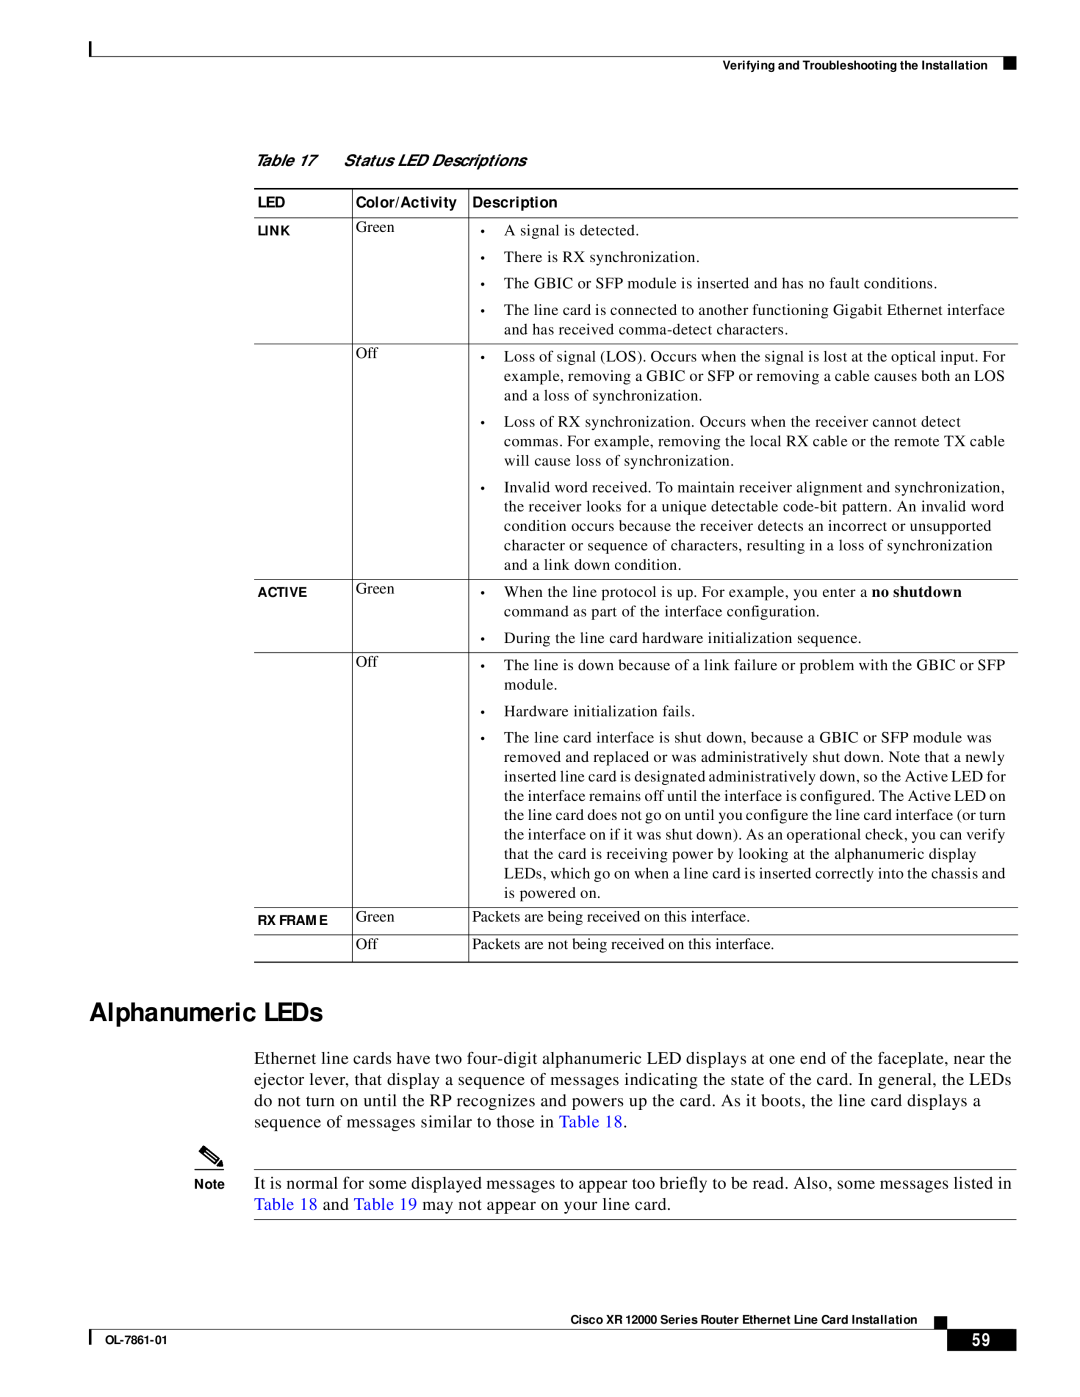 Cisco Systems OL-7861-01 manual Alphanumeric LEDs, Color/Activity, Description 